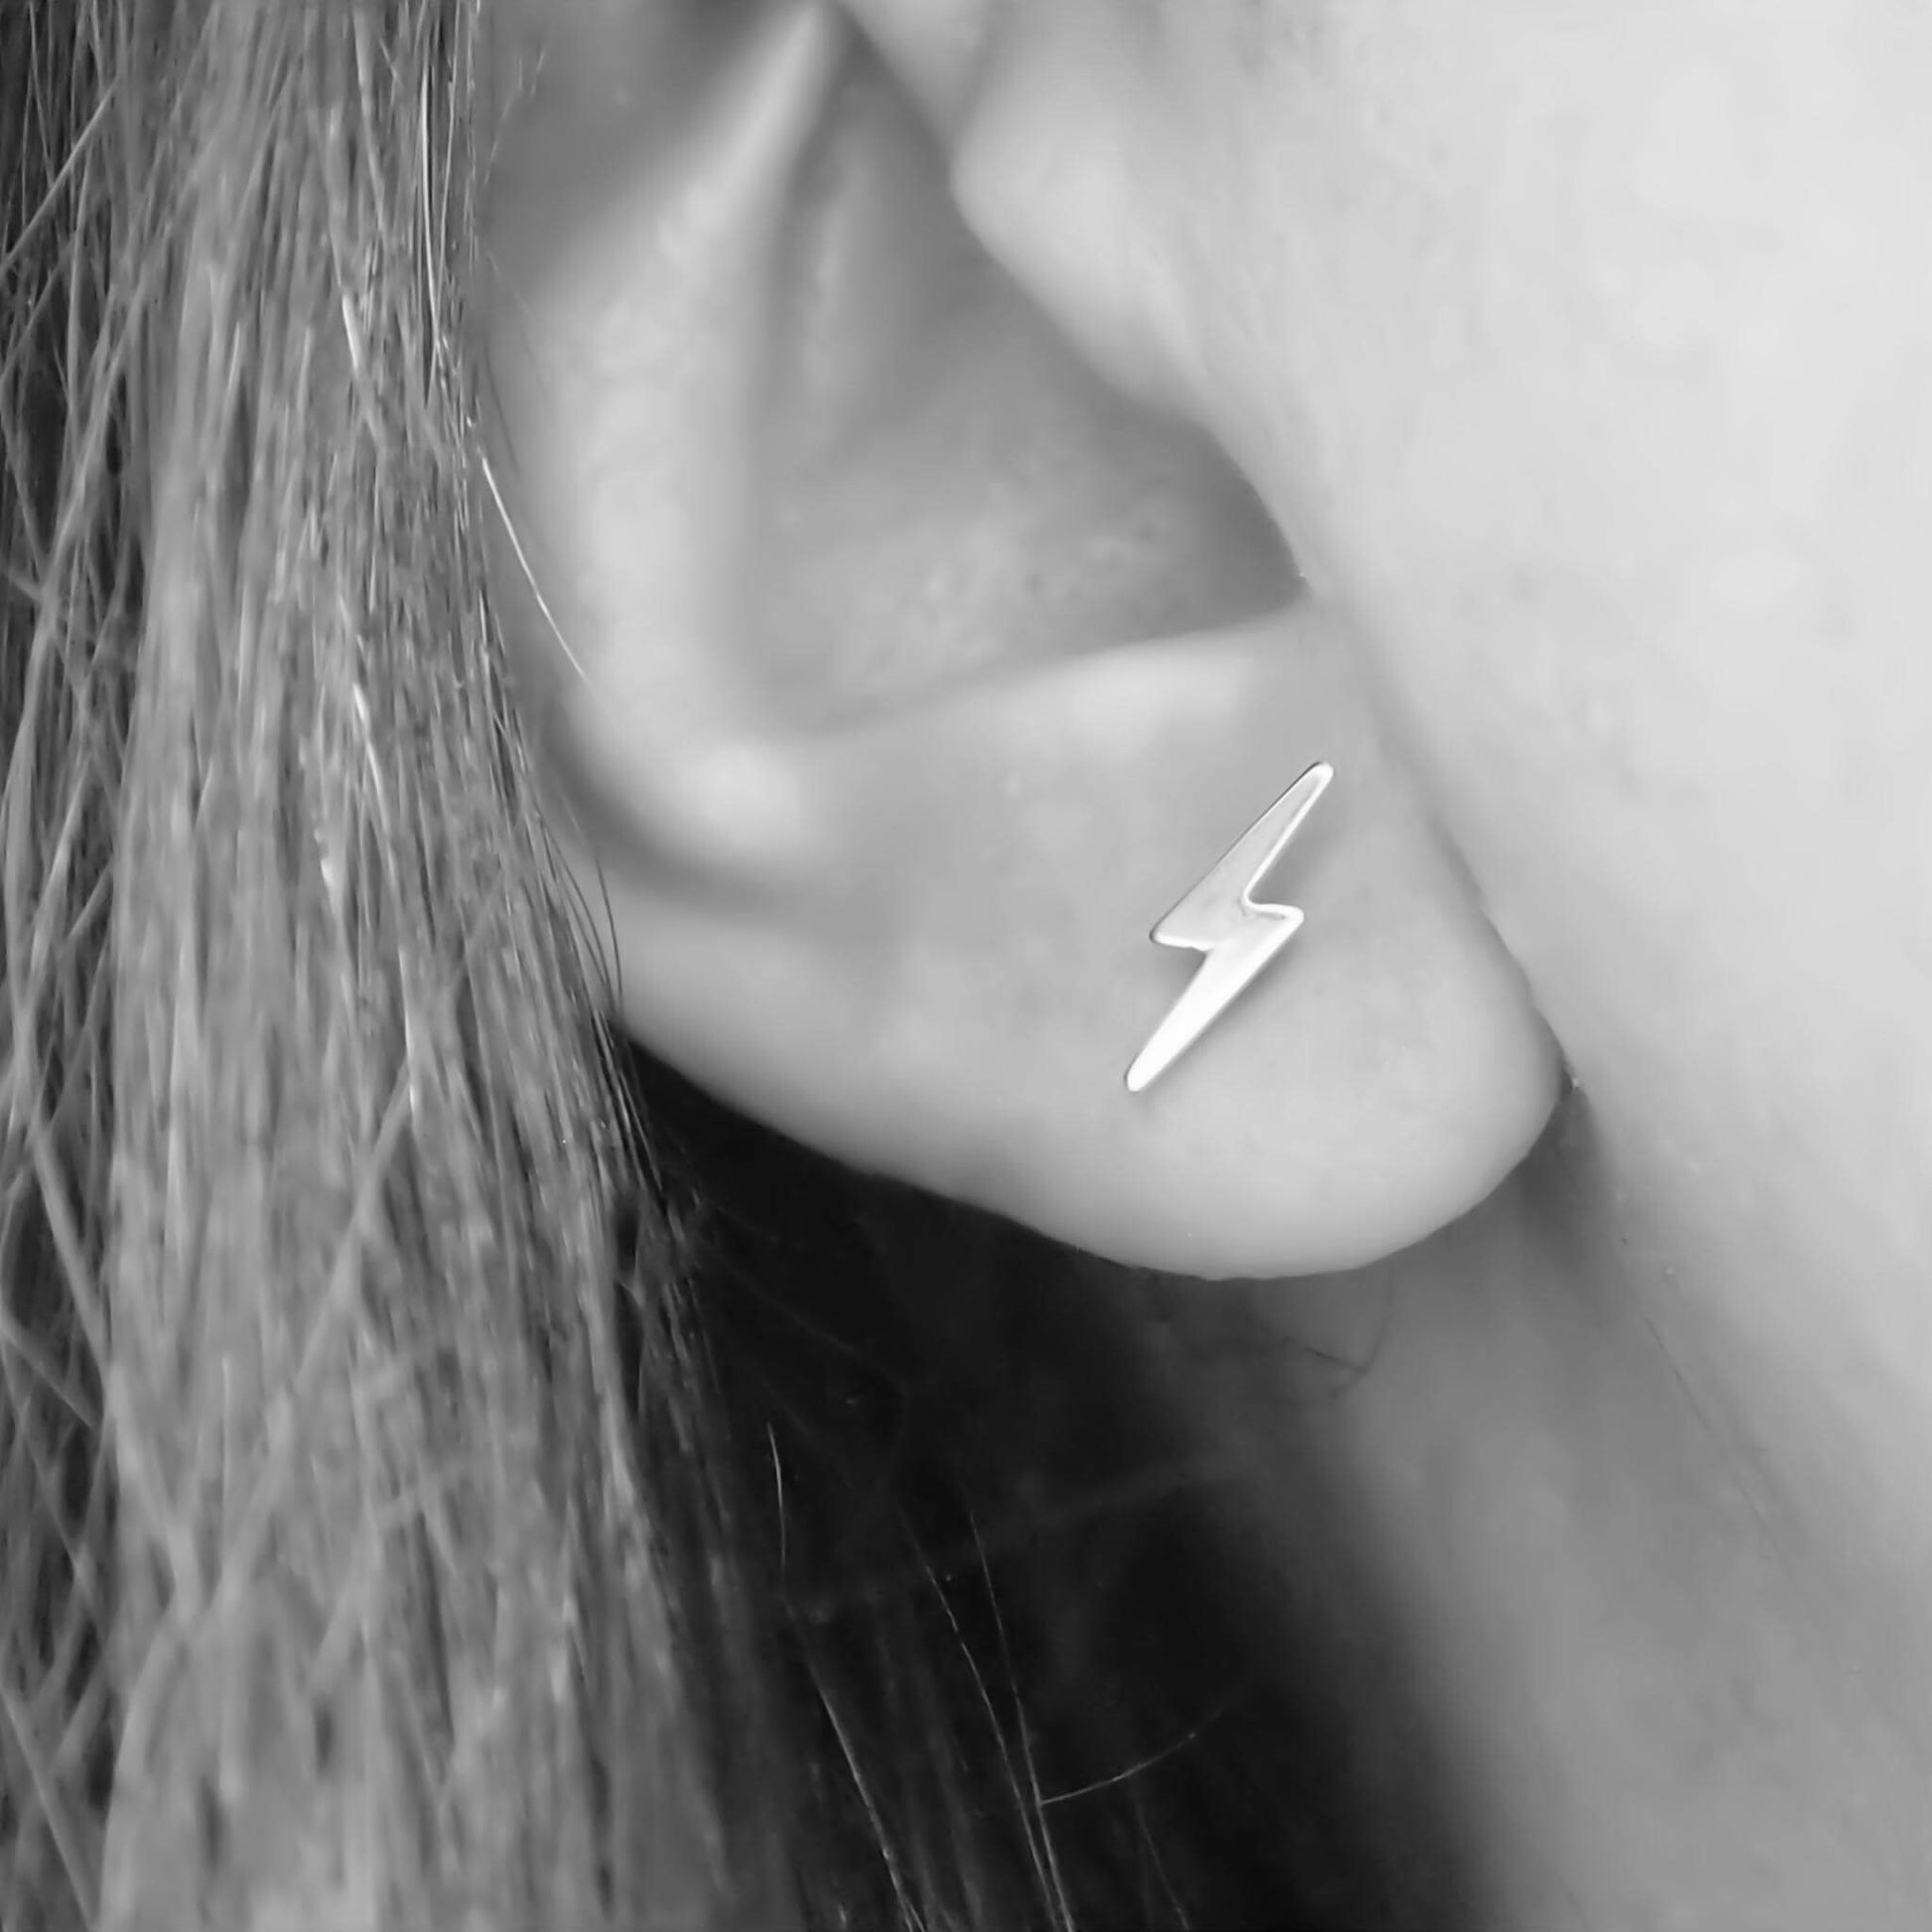 Sterling SIlver lightning bolt earring worn in ear in a black and white image. handmade by maram jewellery in Edinburgh UK